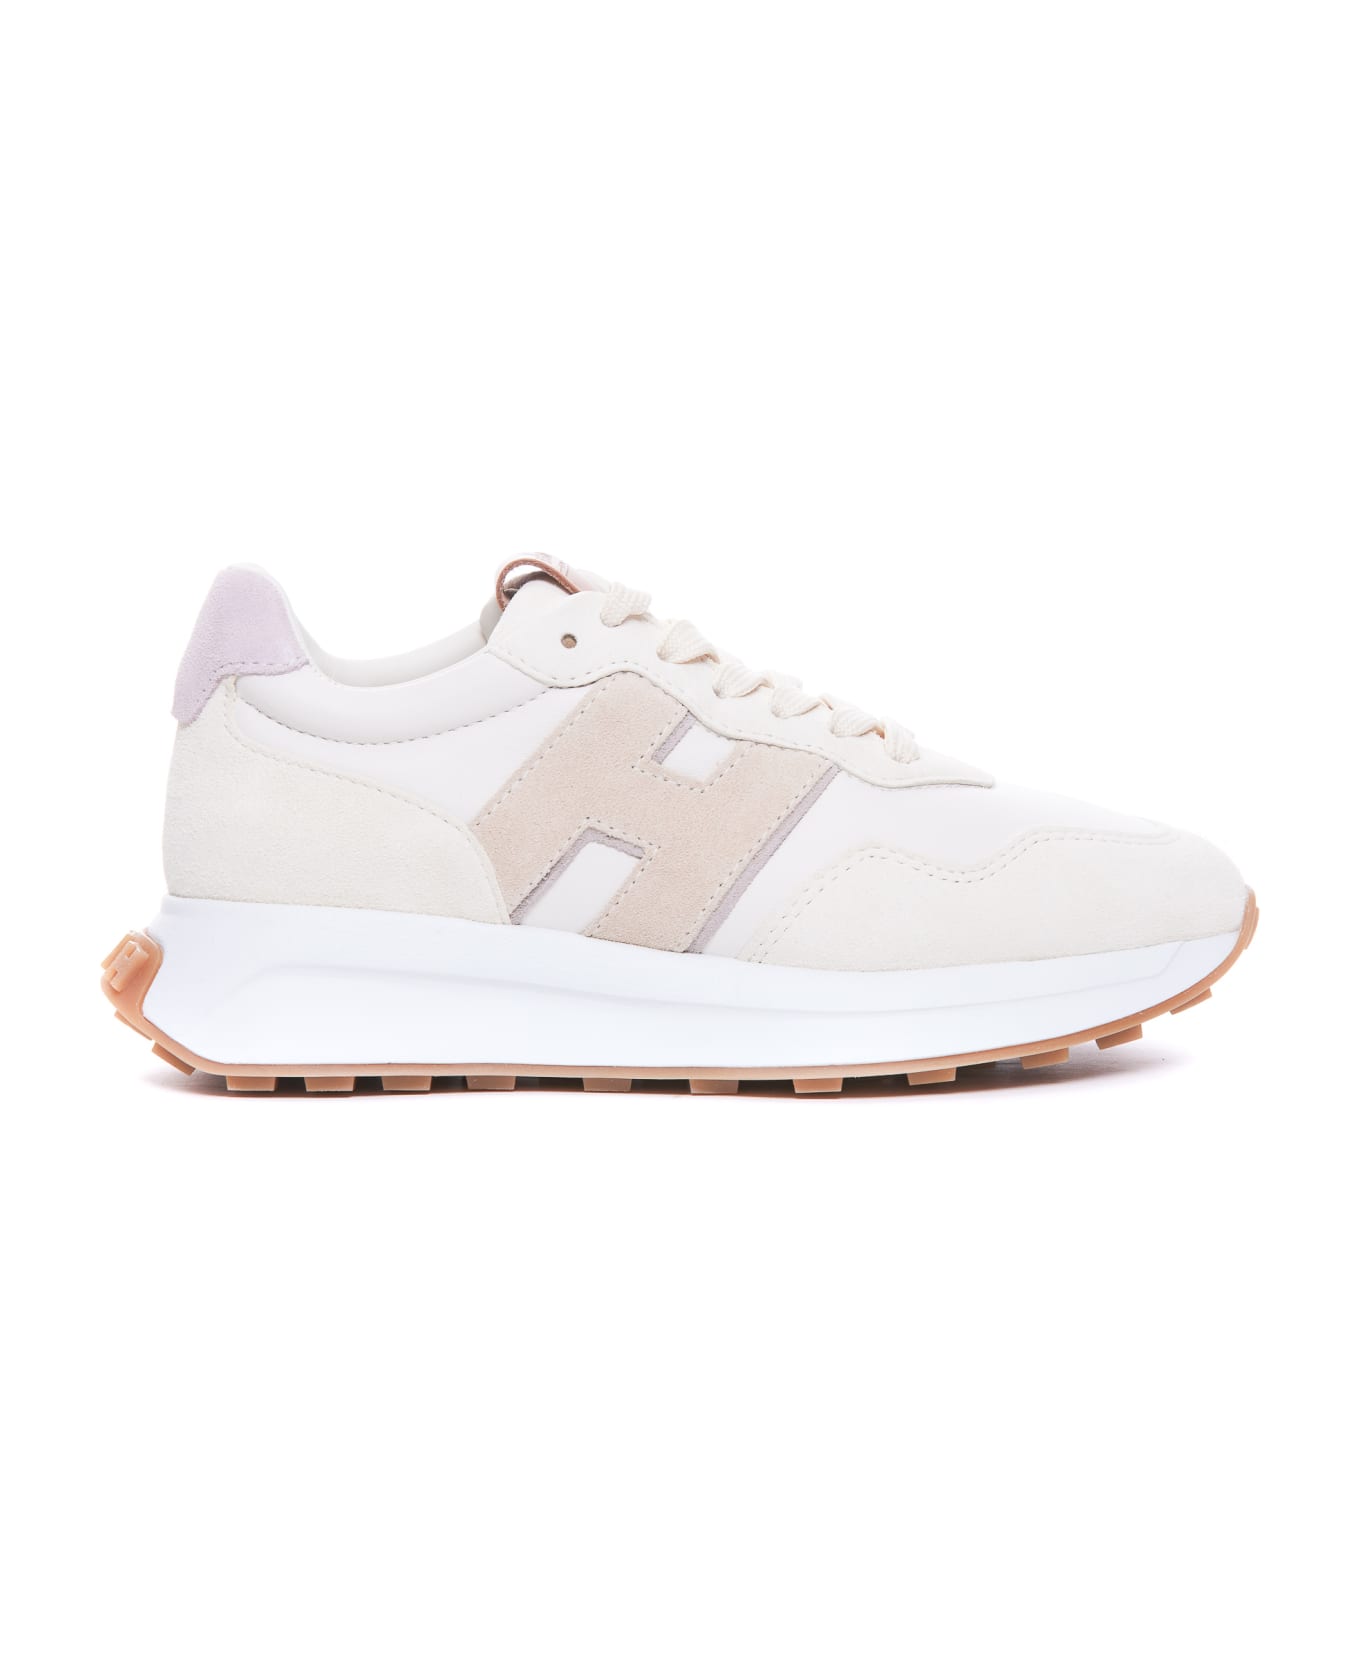 Hogan H641 Sneakers - Nude & Neutrals スニーカー